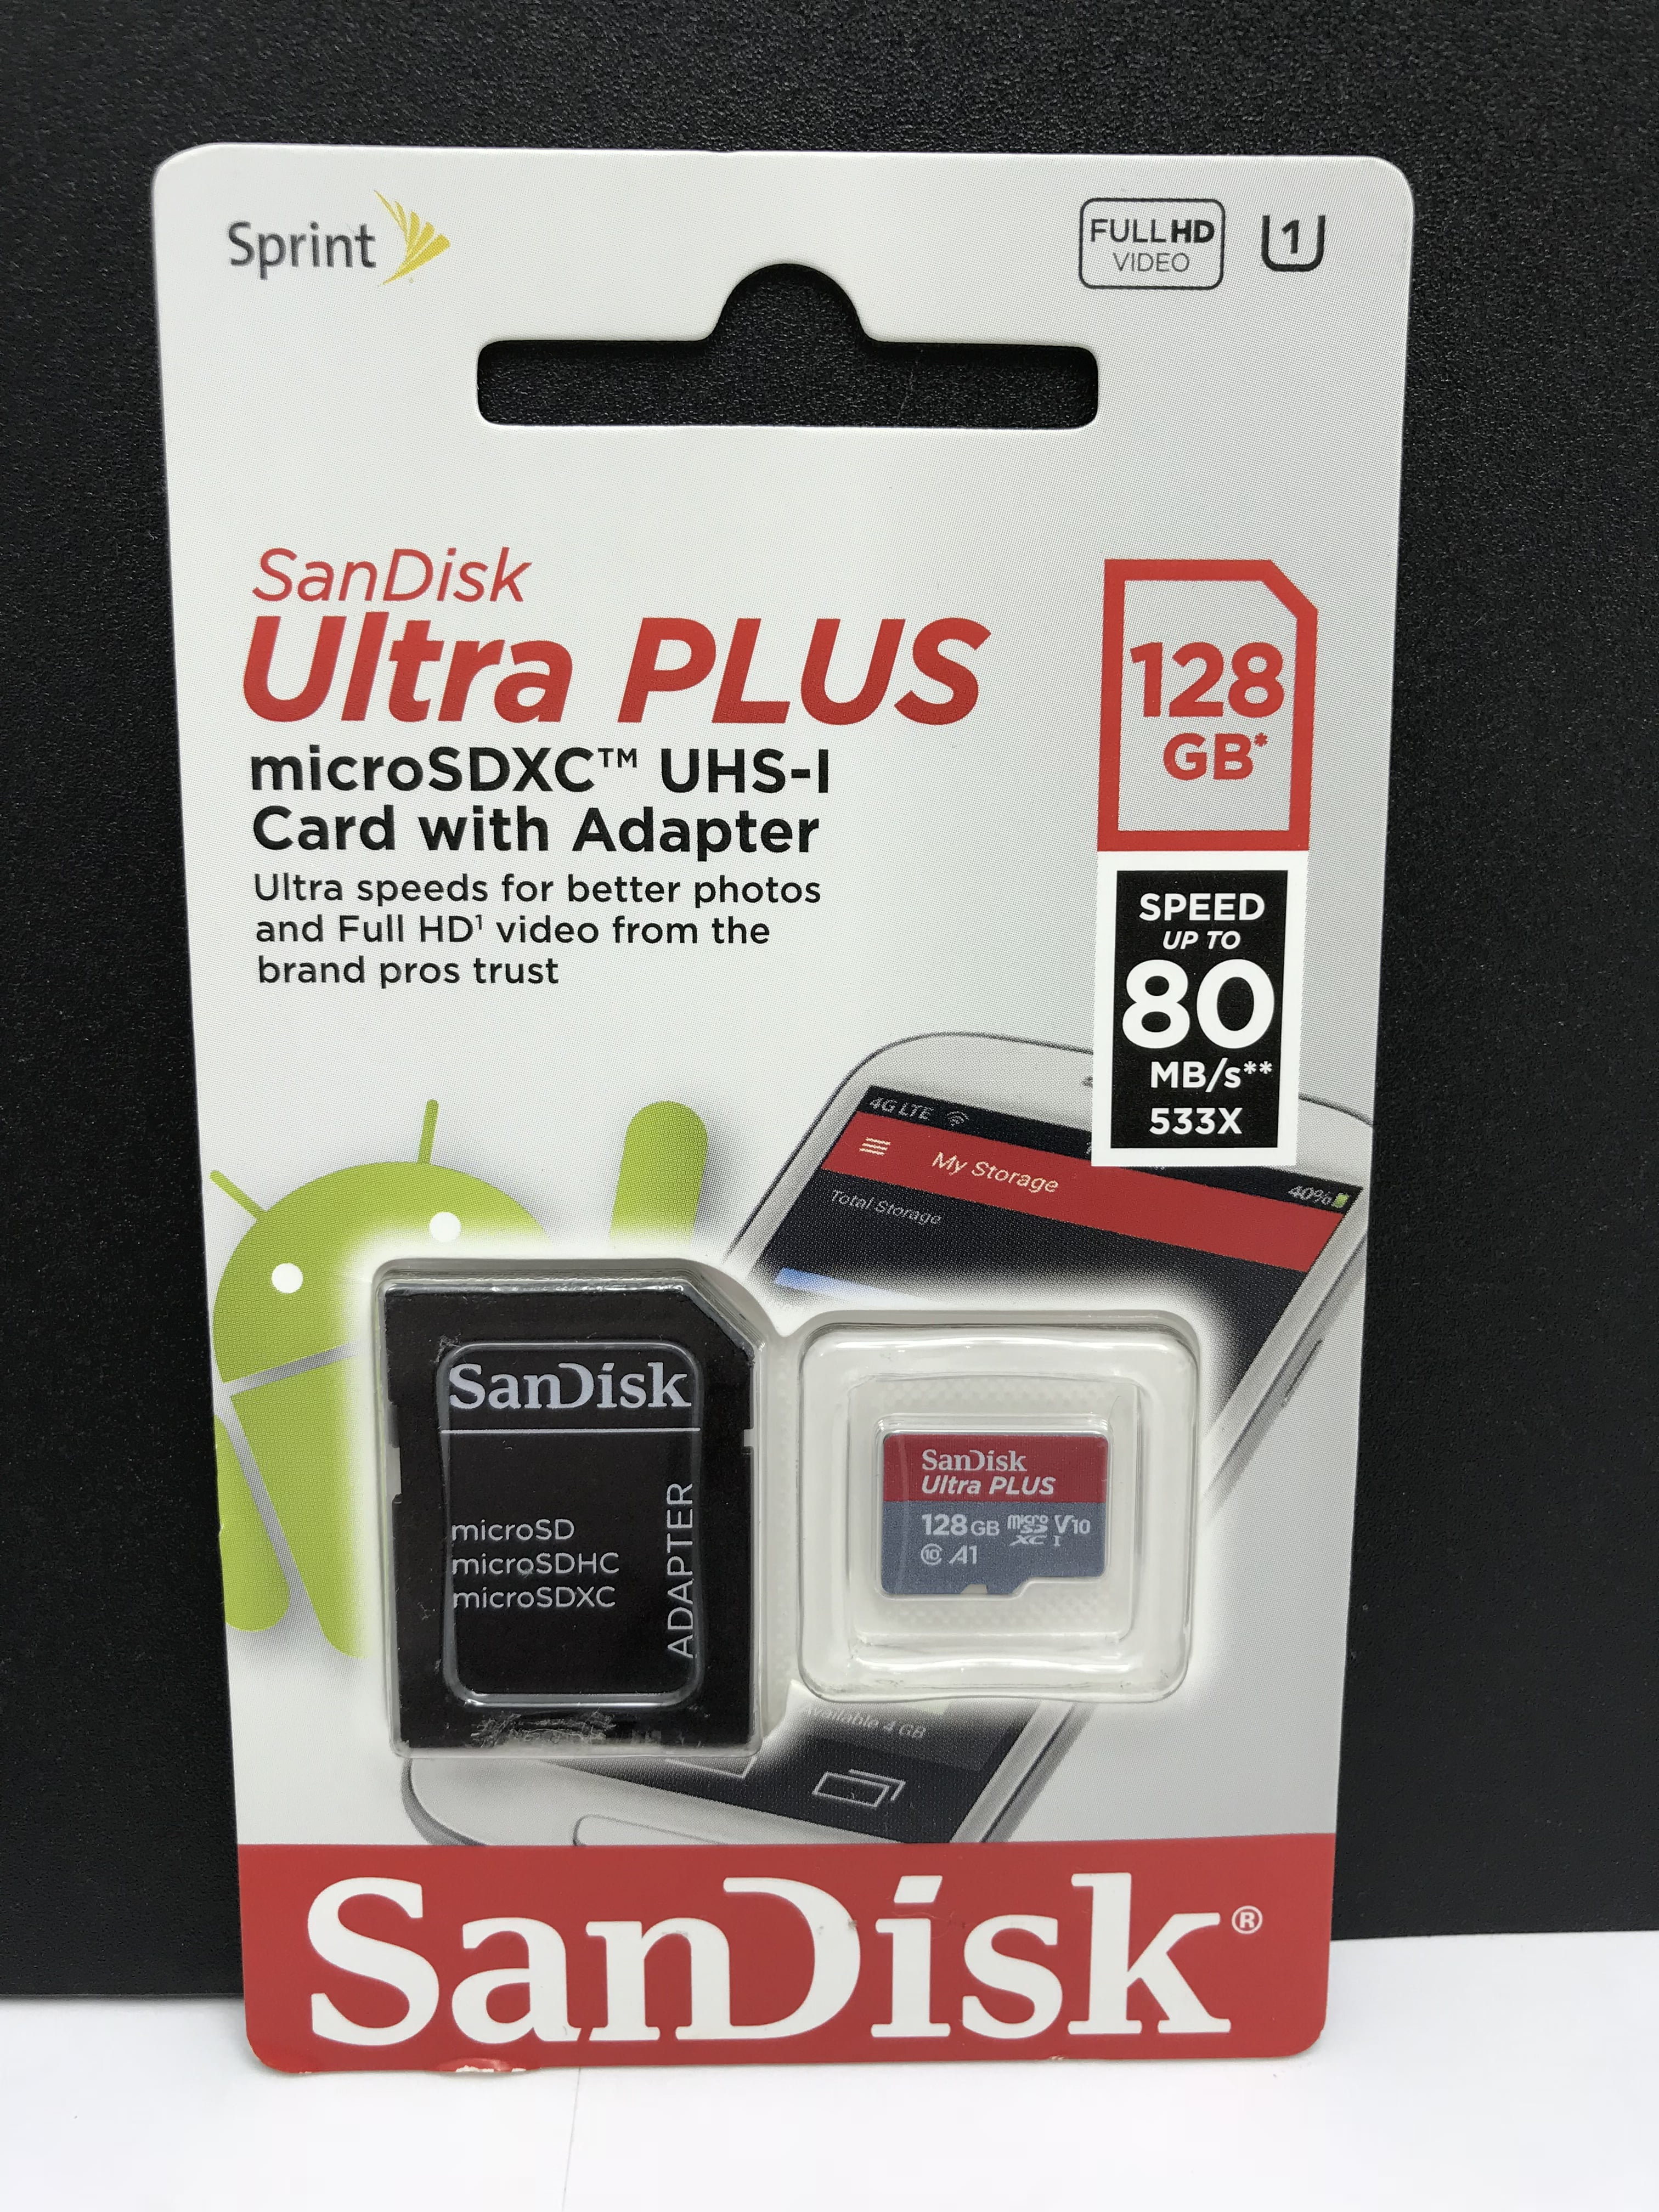 SanDisk ultra 64 GB MicroSDXC Class 10 140 MB/s Memory Card - SanDisk 